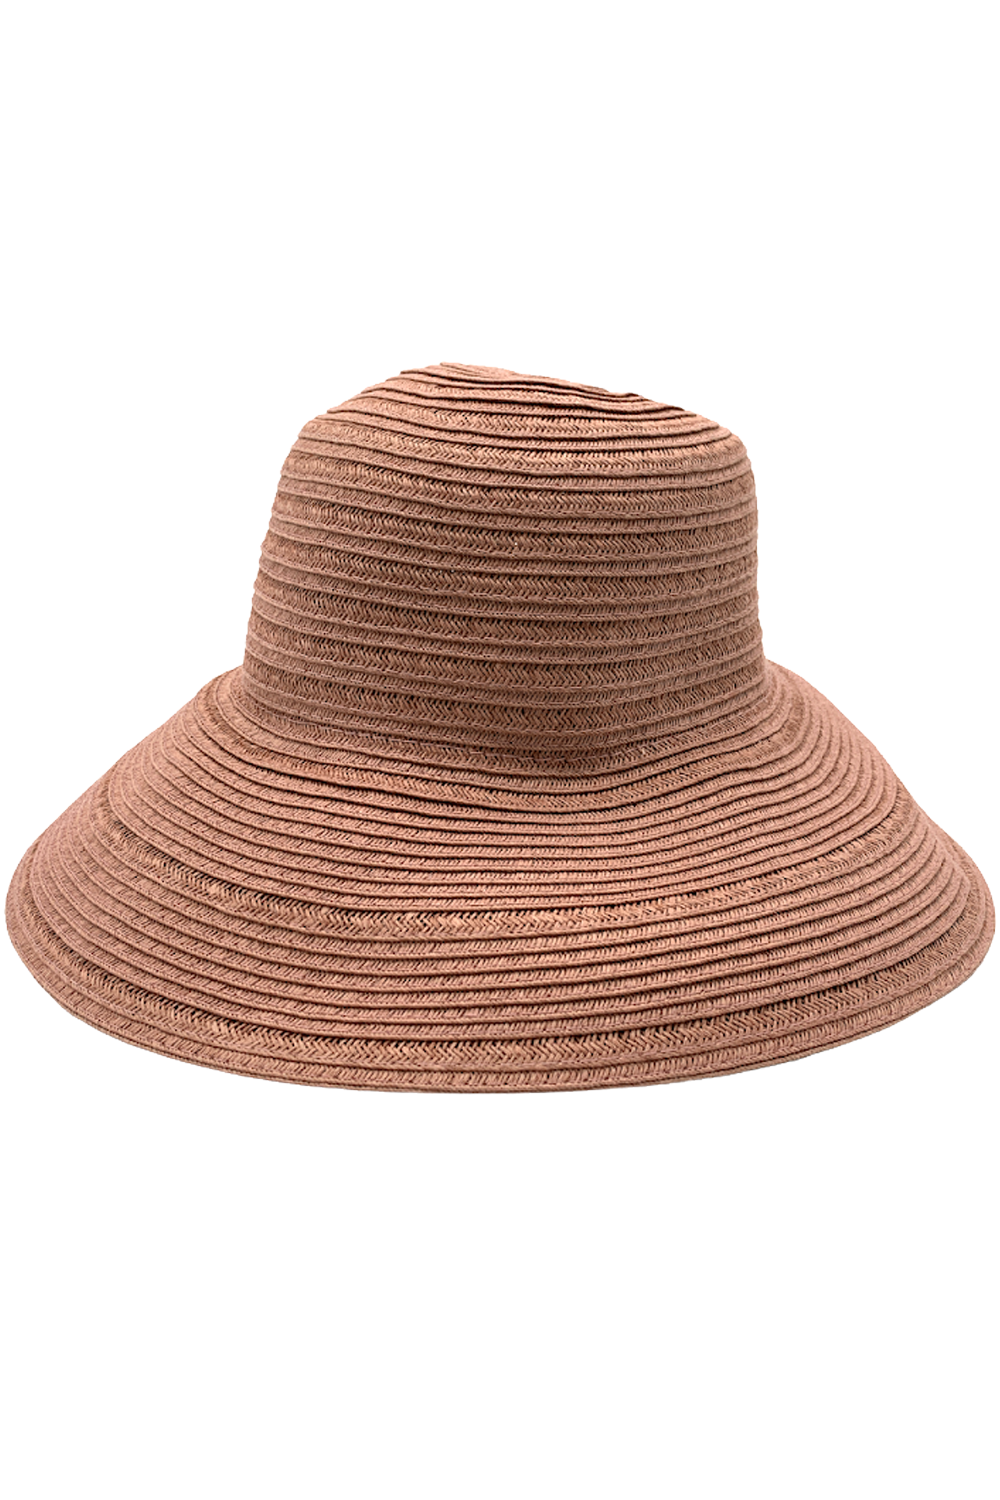 San Diego Hat Co. 6-Way Adjustable Sun Hat UPF50